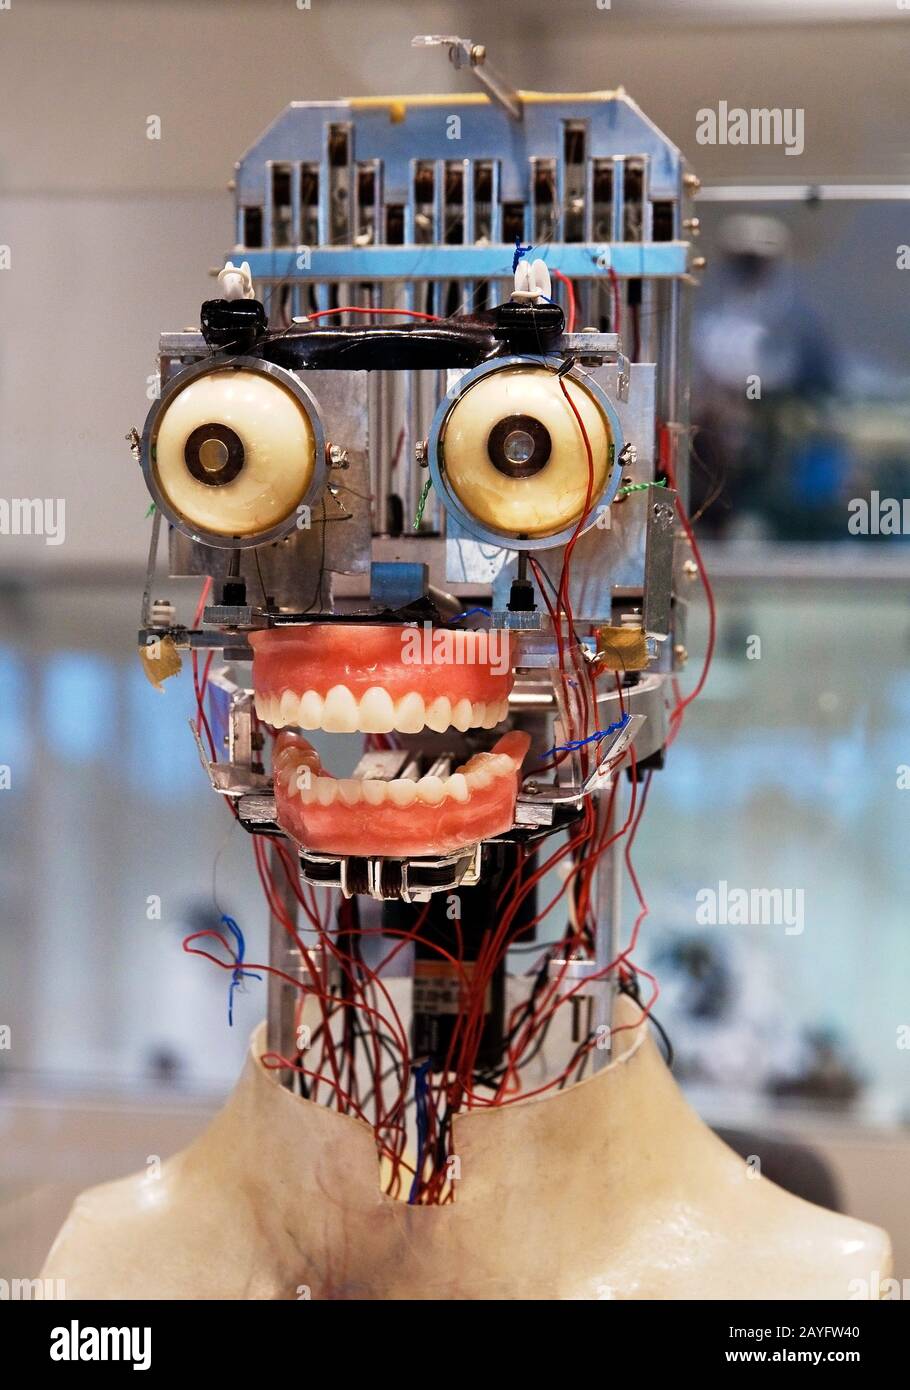 robot face, Germany Stock Photo